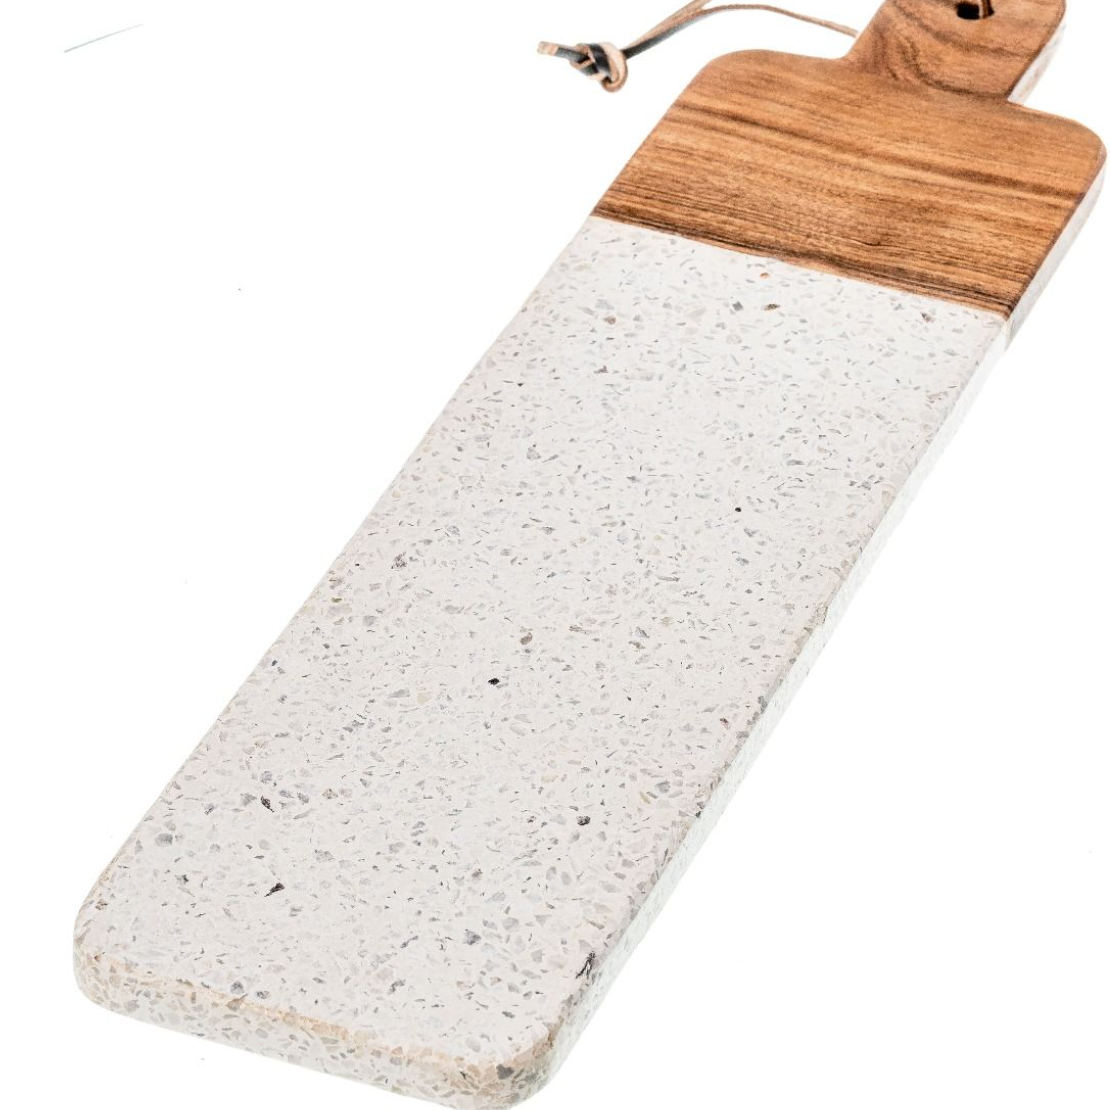 Rectangle Terrazzo & Wood Chopping Board - Natural/White - Daisy Grace Lifestyle